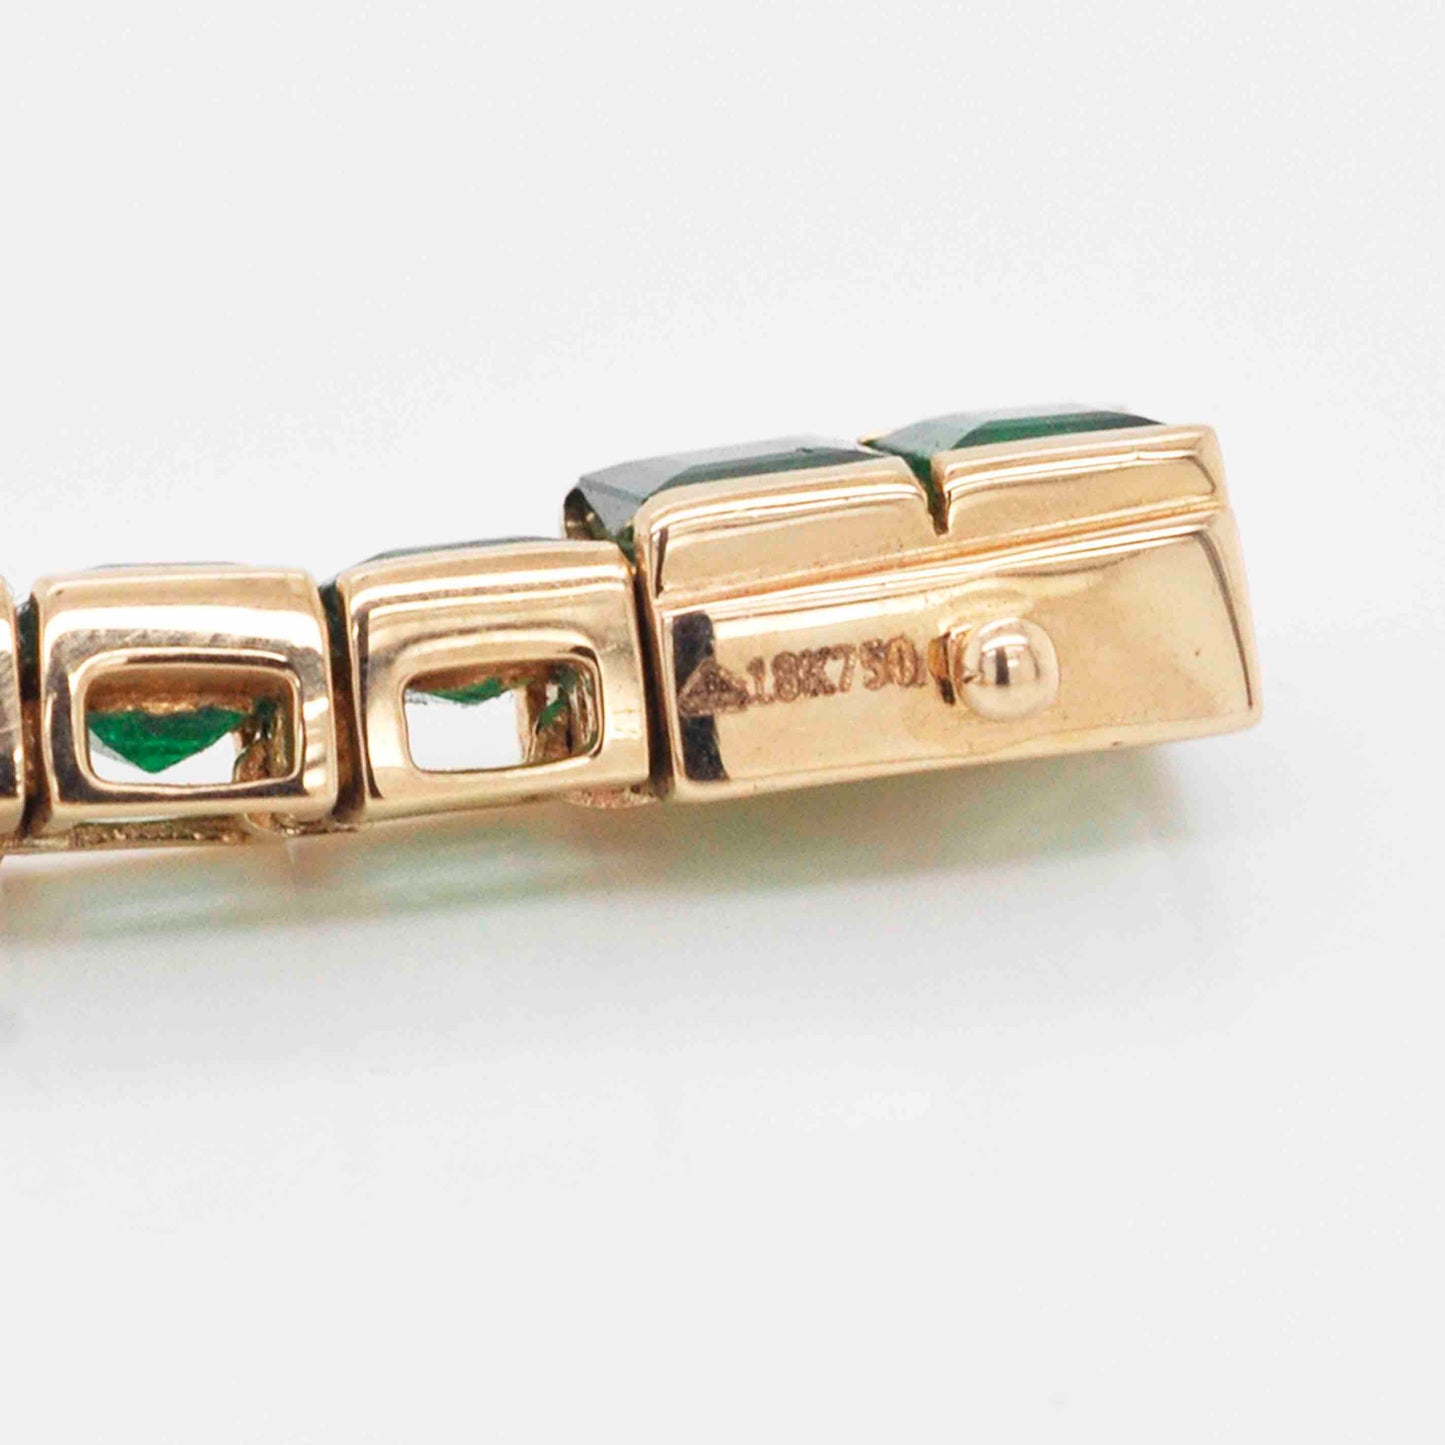 18K Gold Square Zambian Emerald Art Deco Tennis Bracelet - Vaibhav Dhadda Jewelry